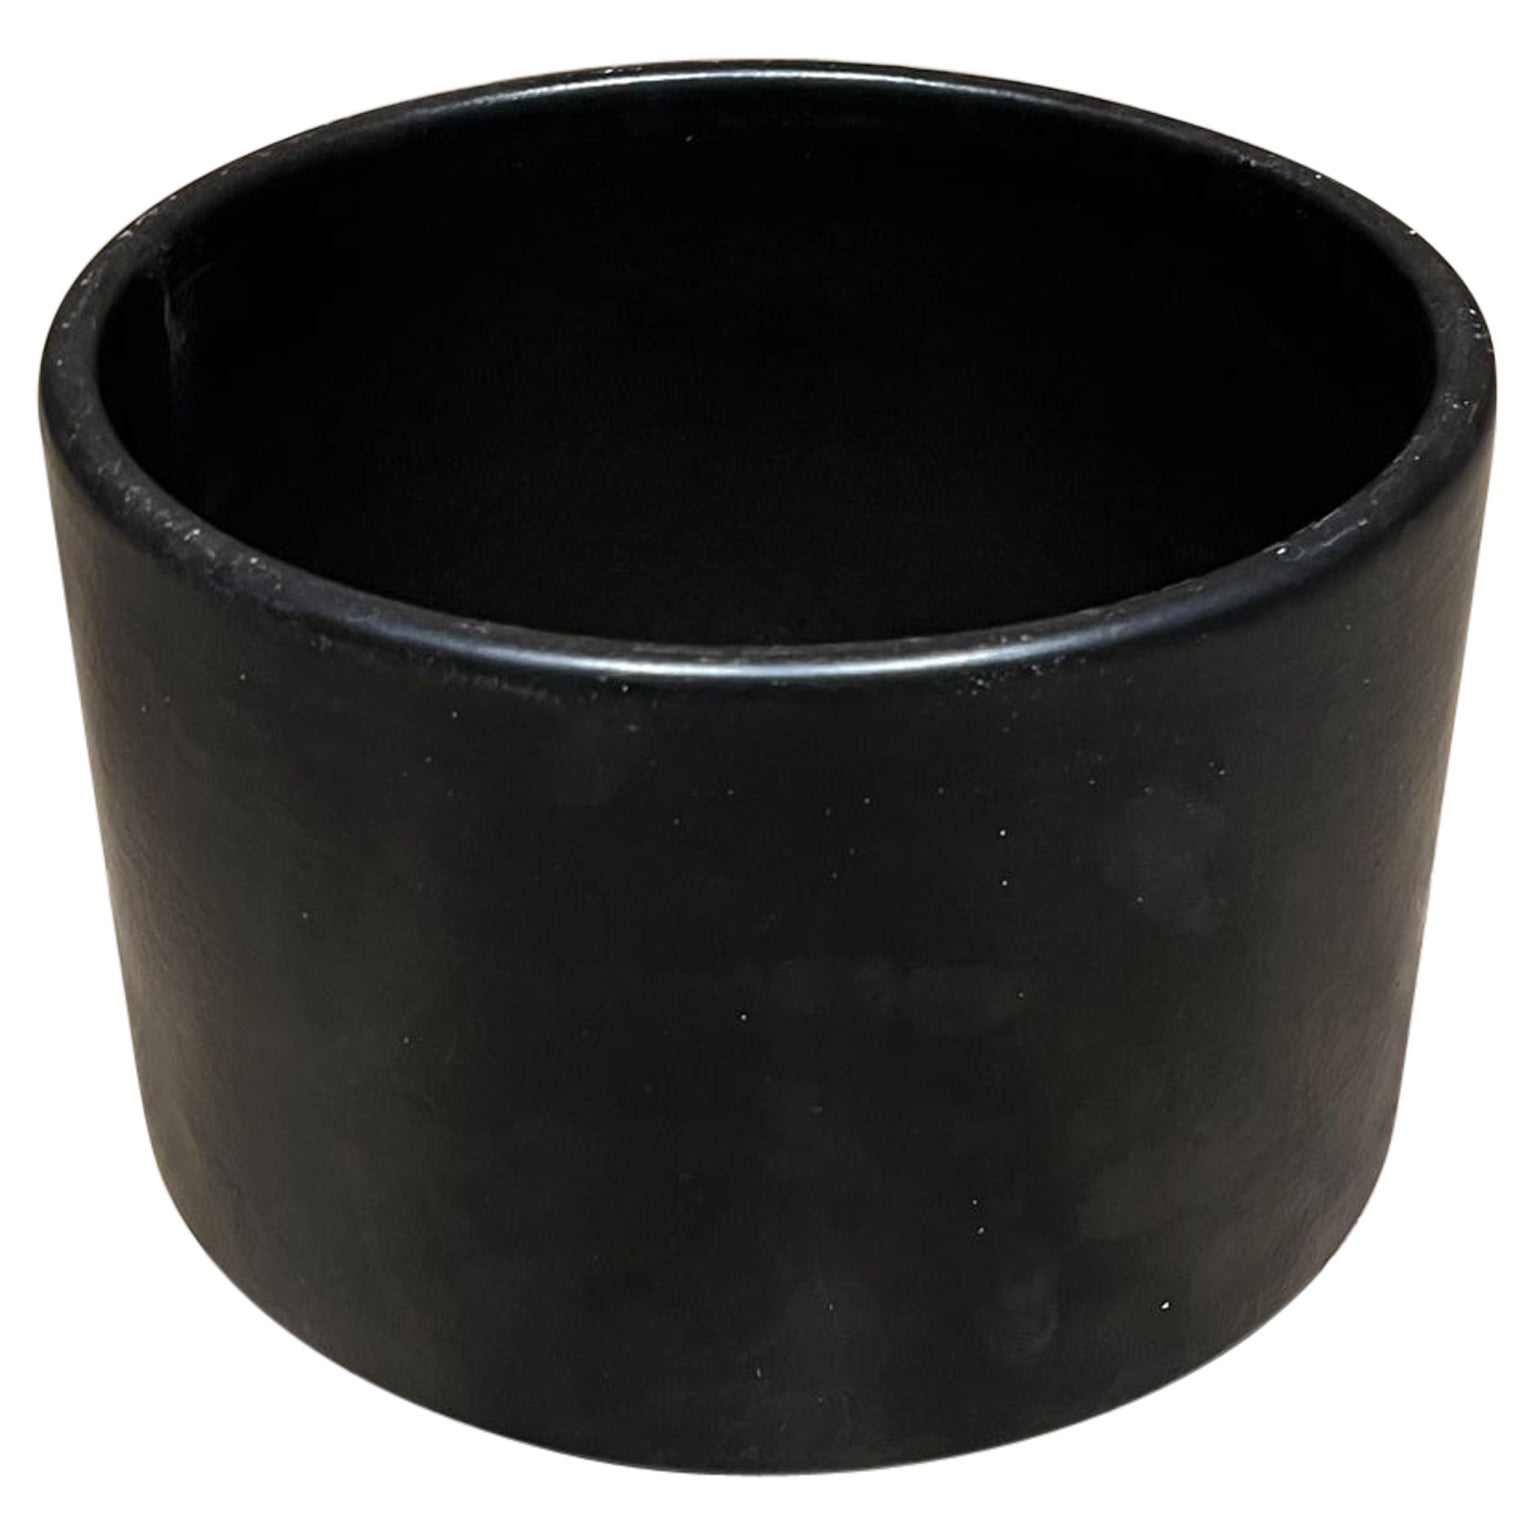 1960s Modern Planter Pot Small Black La Verne, Calif Architectural Pottery